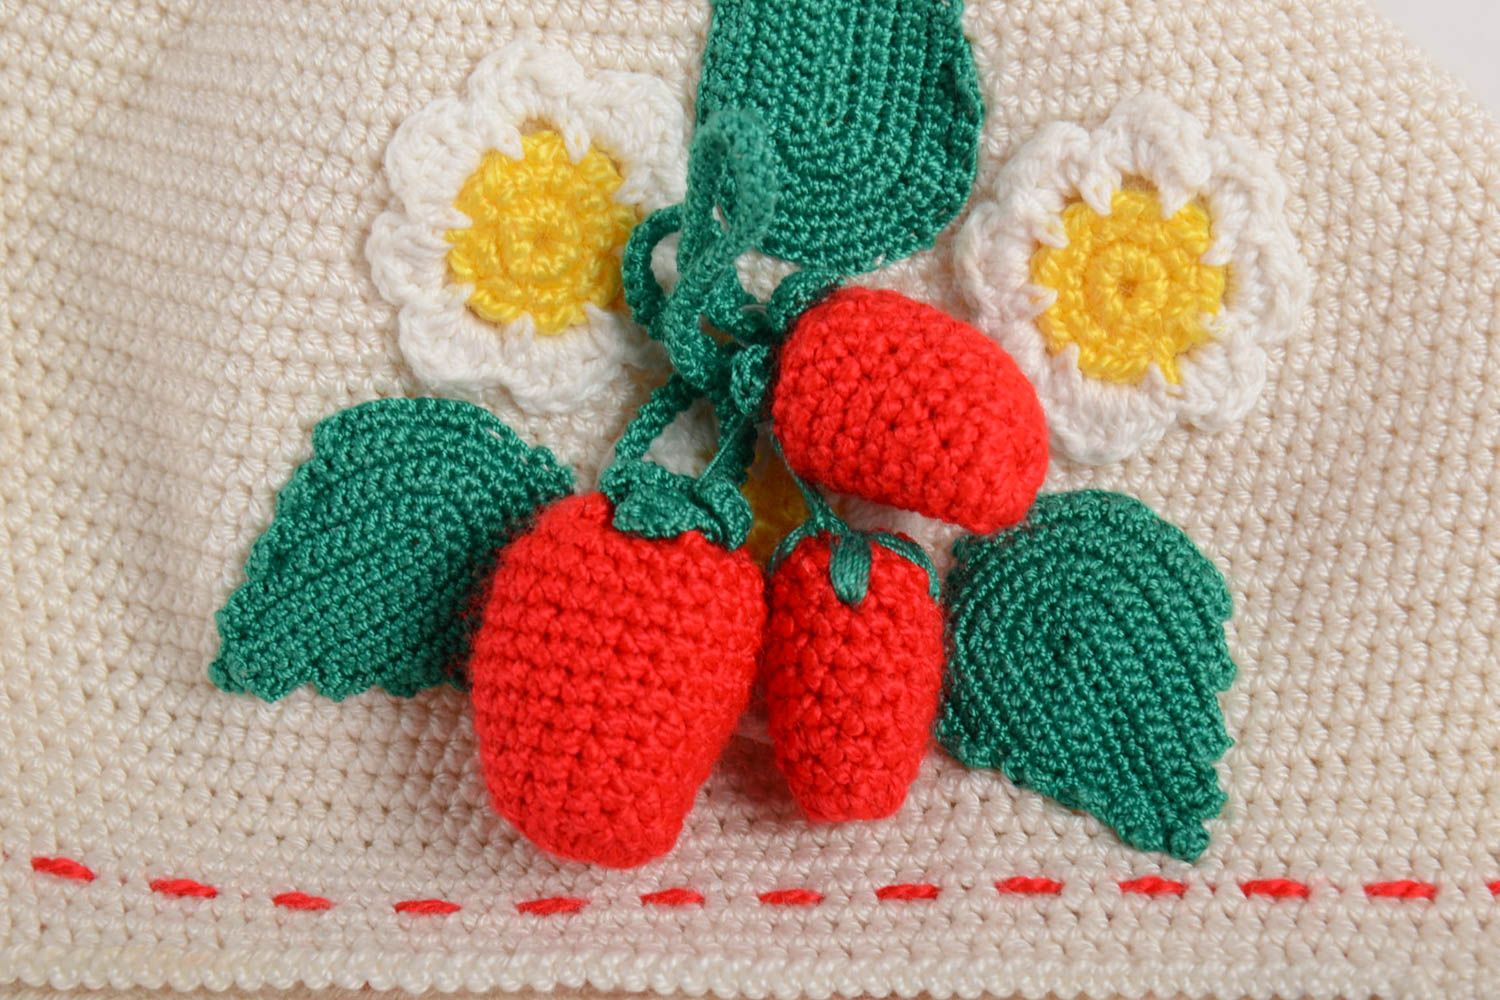 Crochet baby hat handmade crochet accessories toddler hat kids accessories photo 2